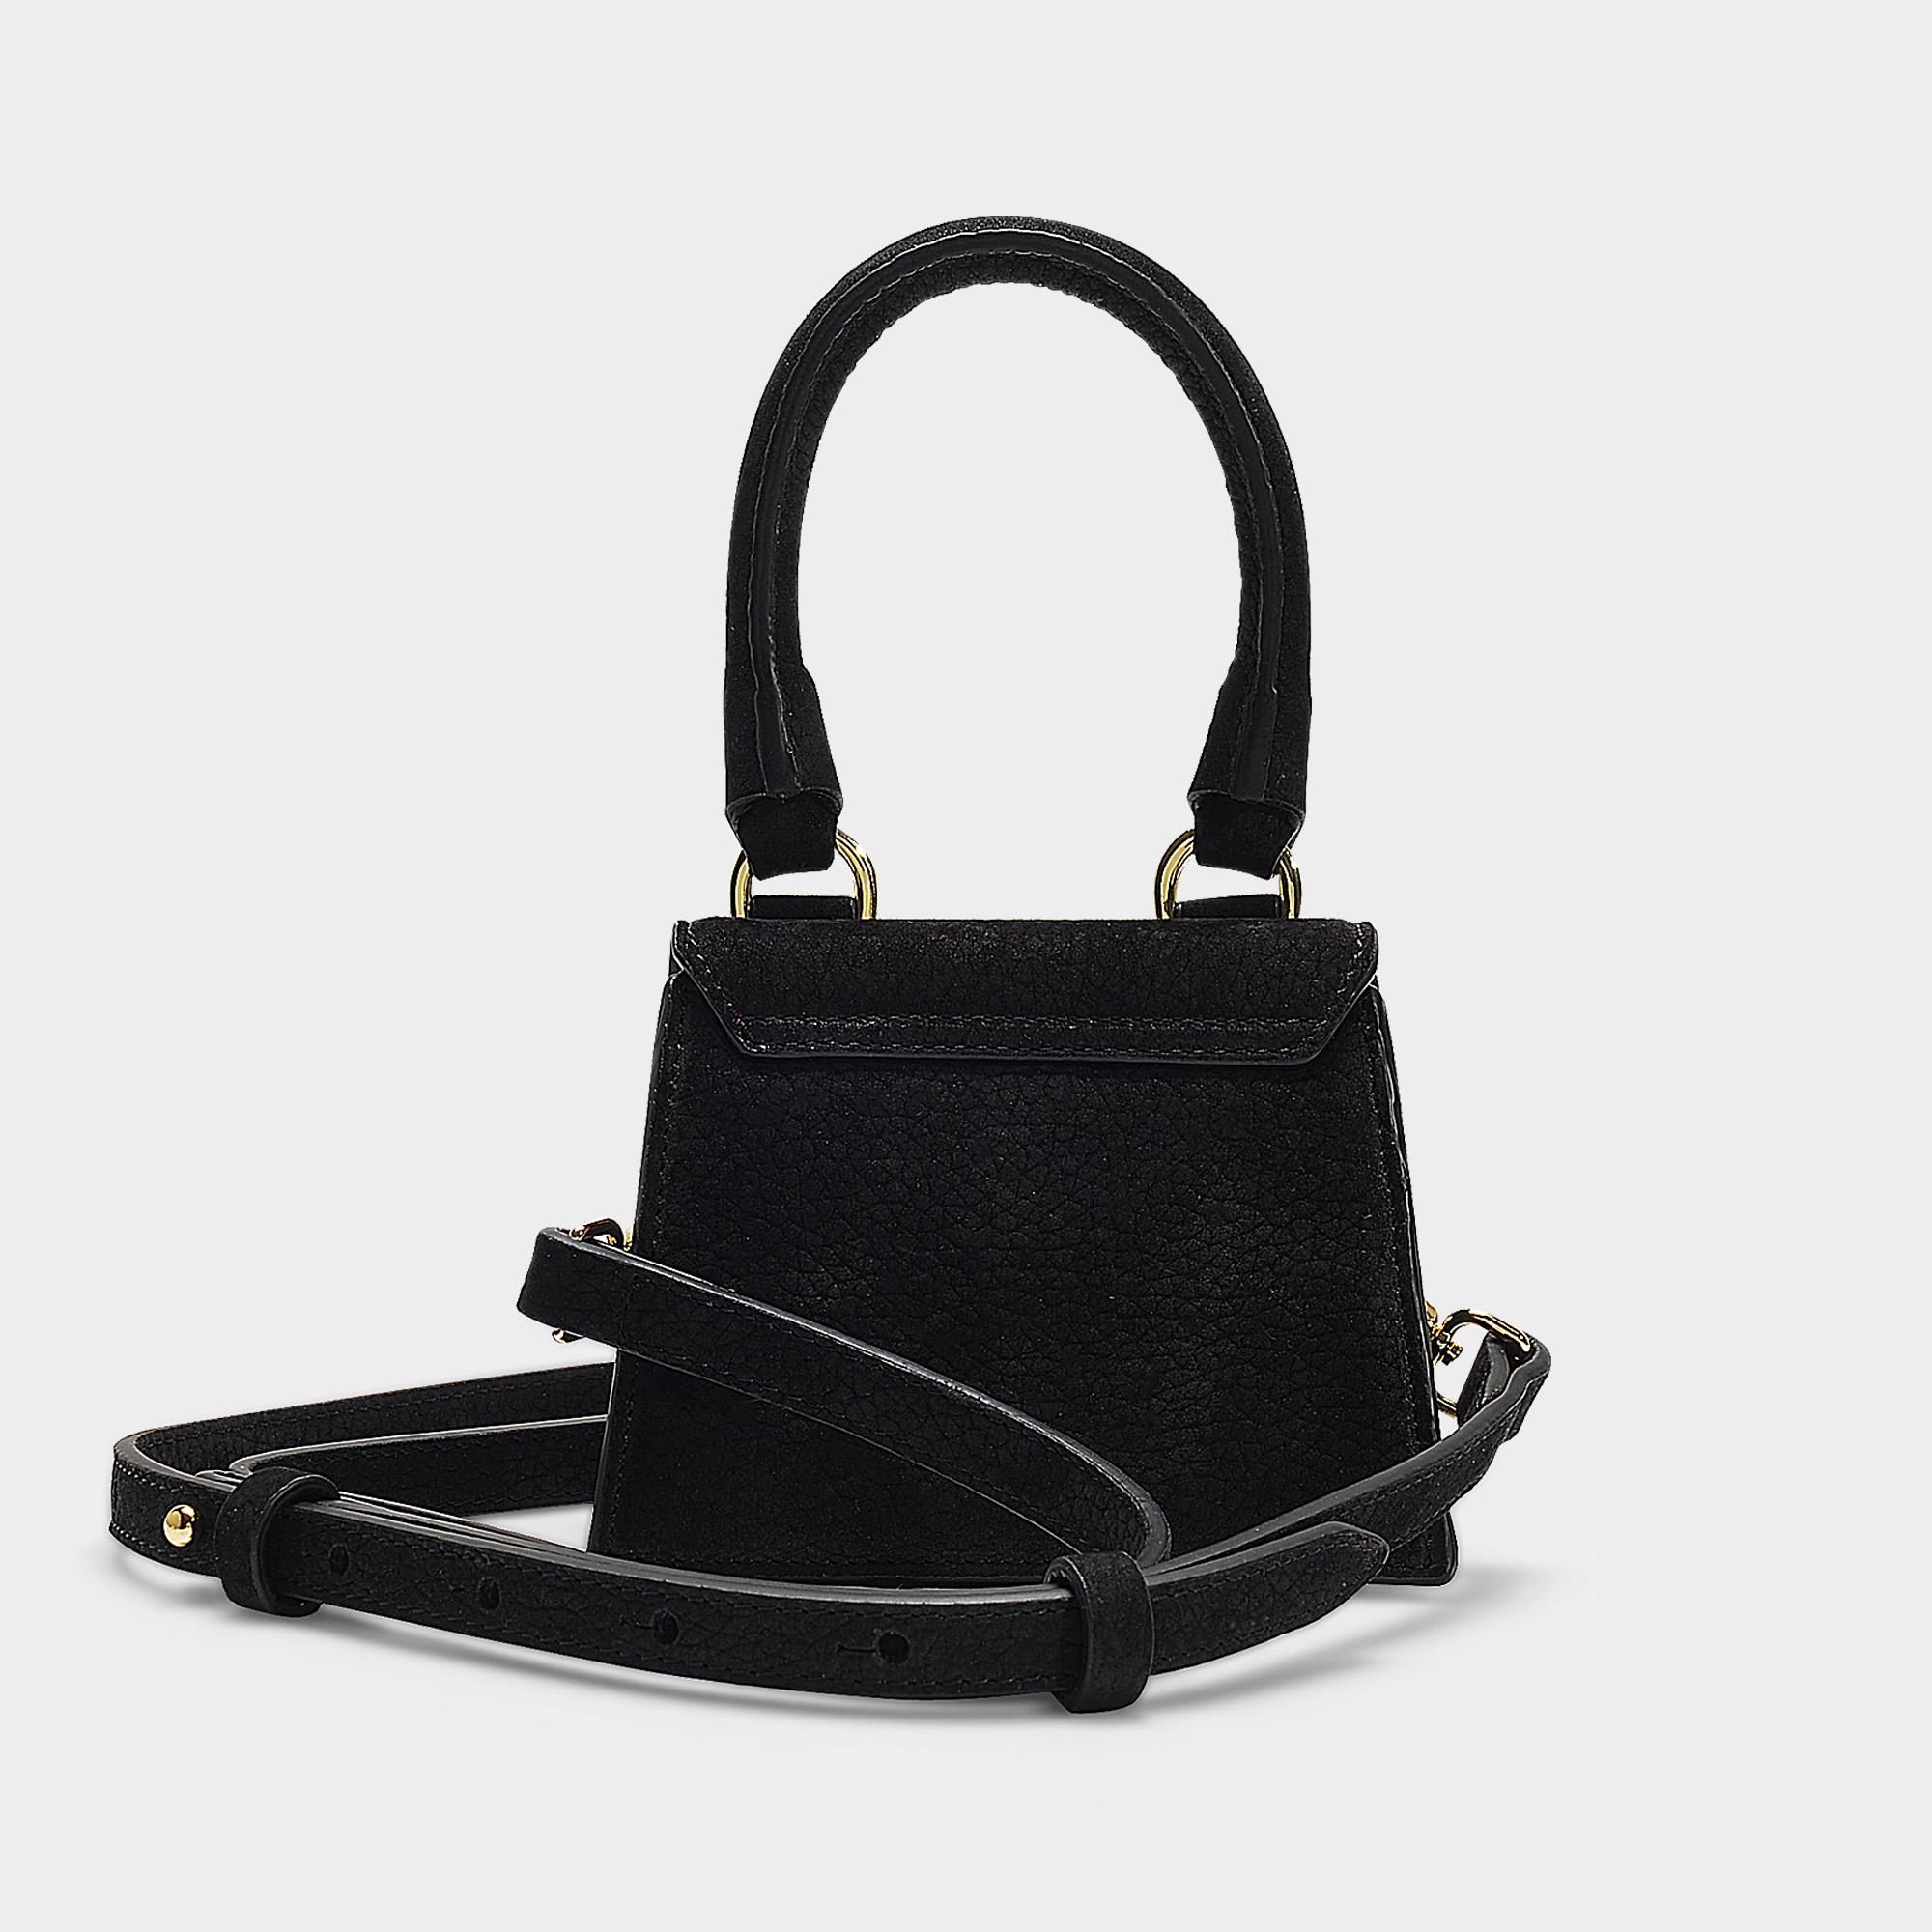 Jacquemus Le Chiquito Leather Mini Bag in Black - Lyst